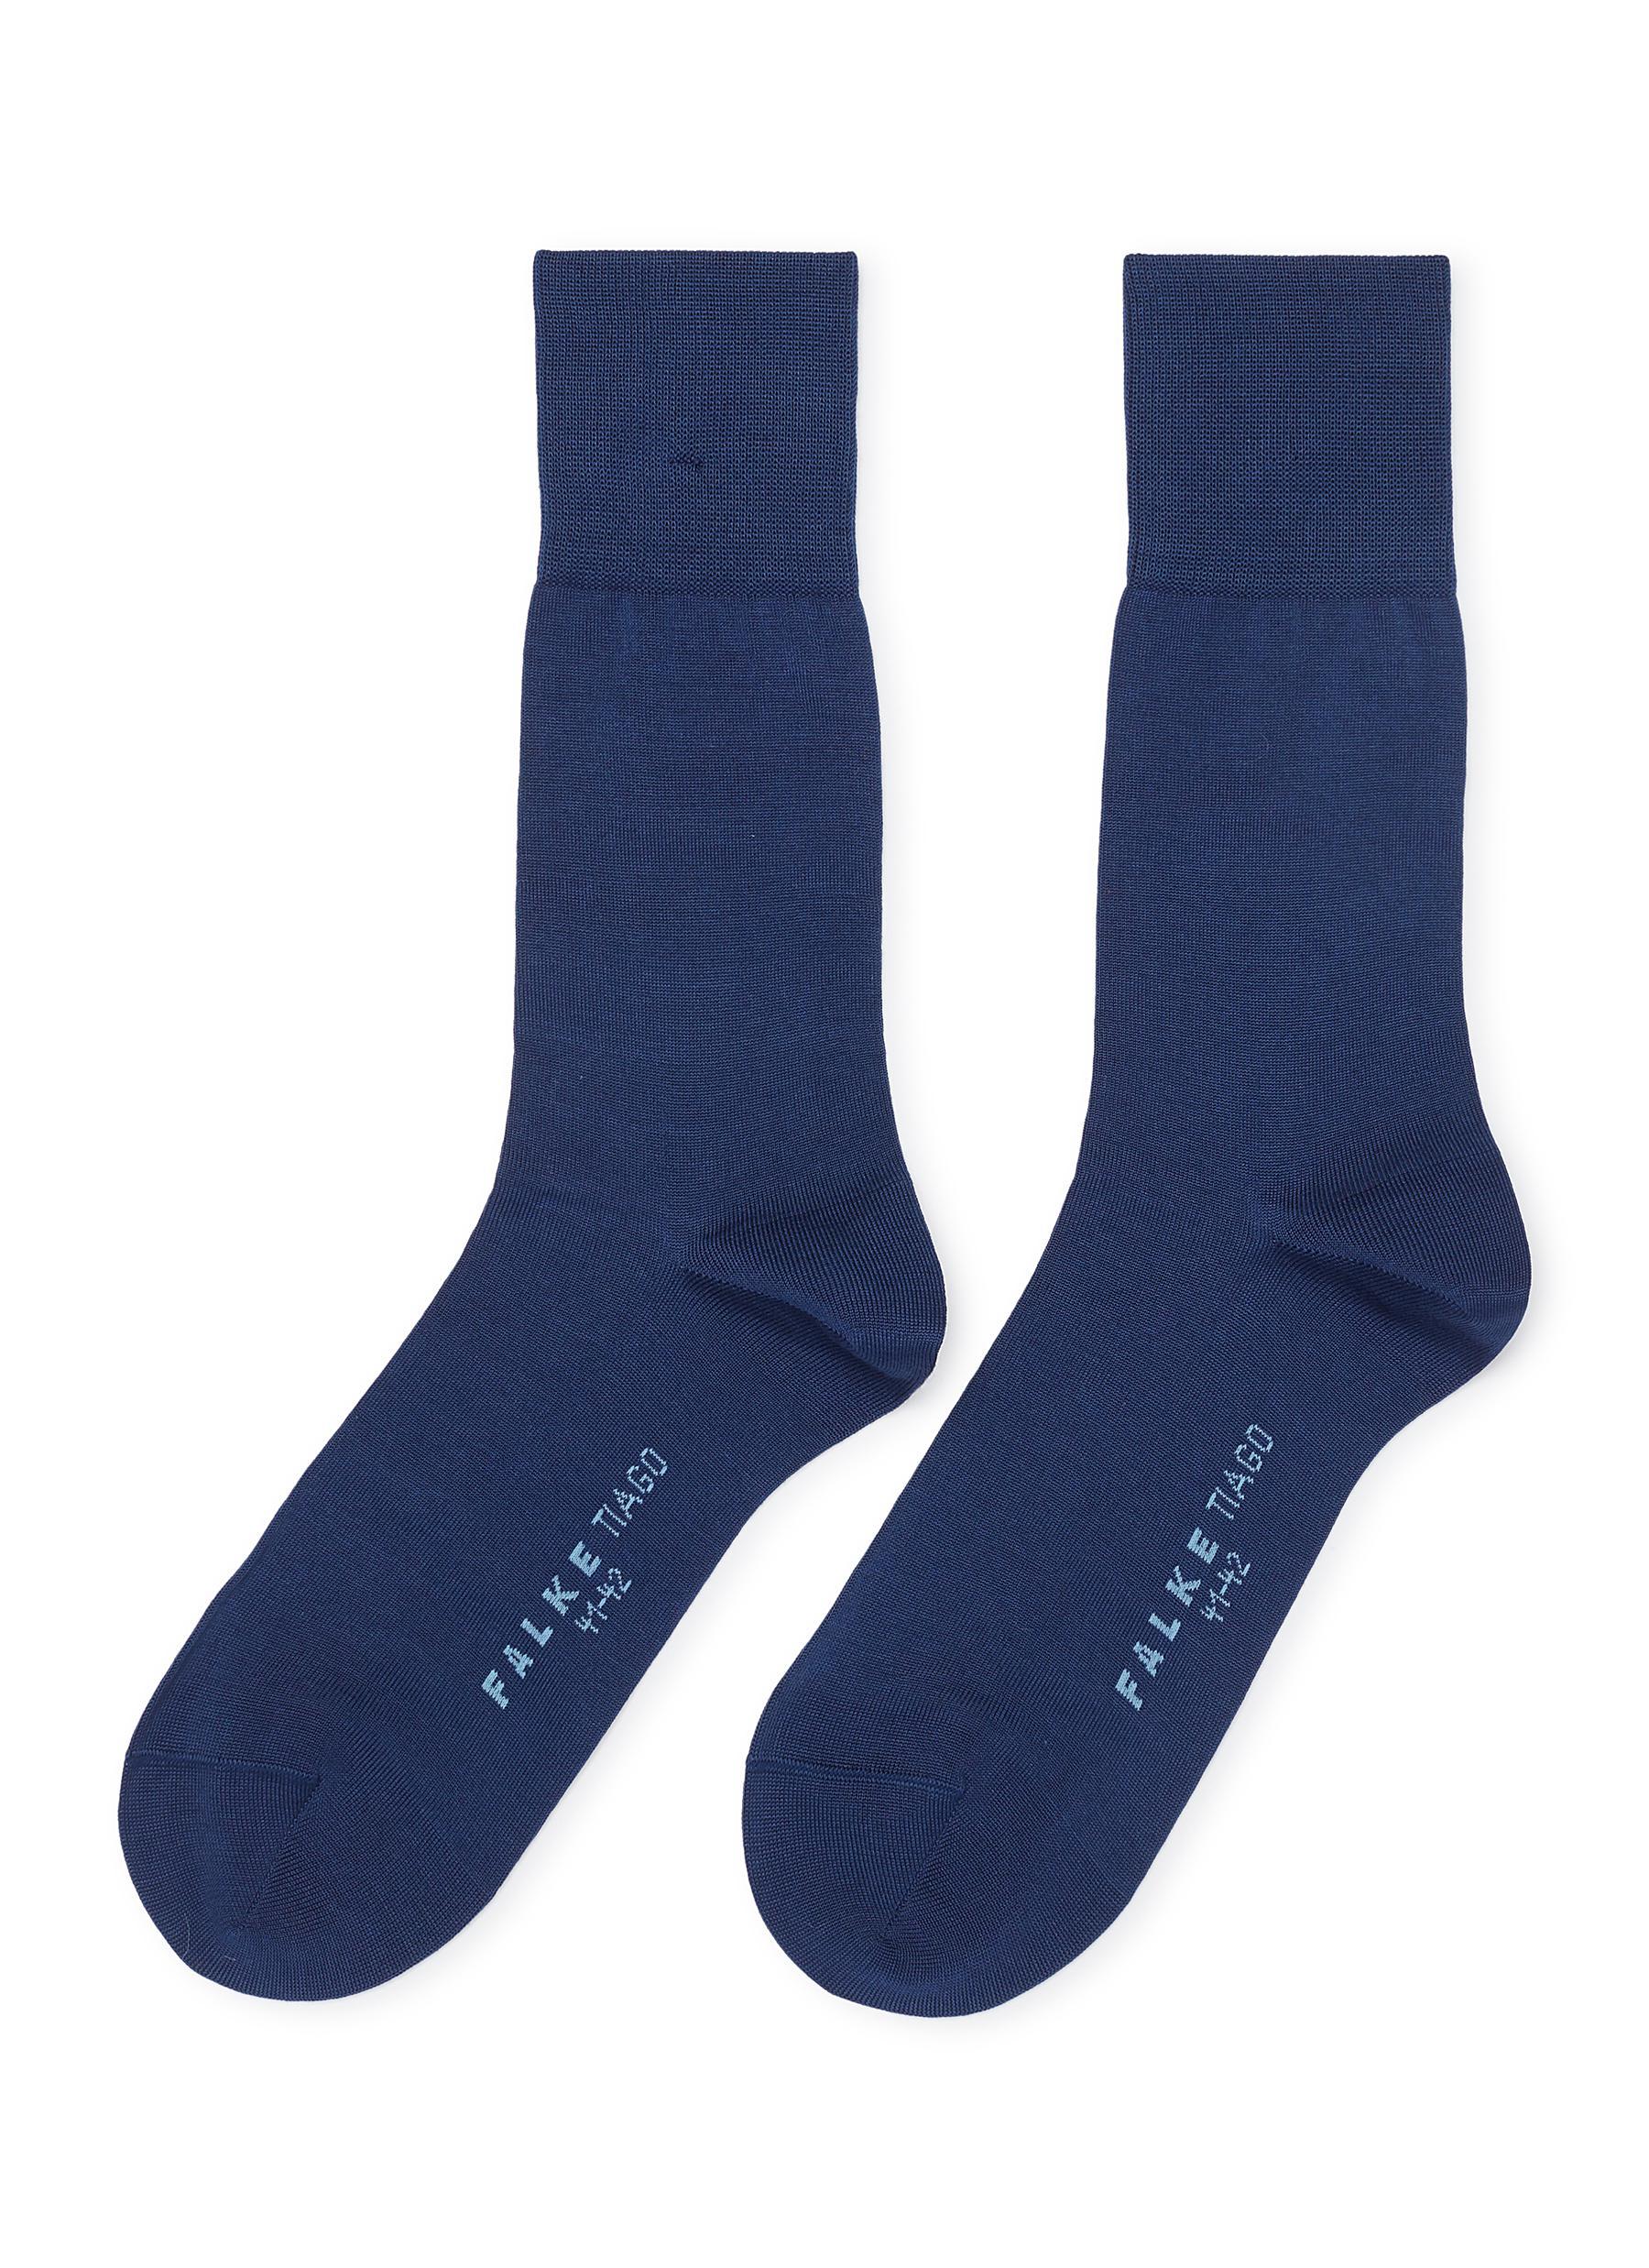 Falke Cotton 'tiago' Socks in Indigo (Blue) for Men - Lyst